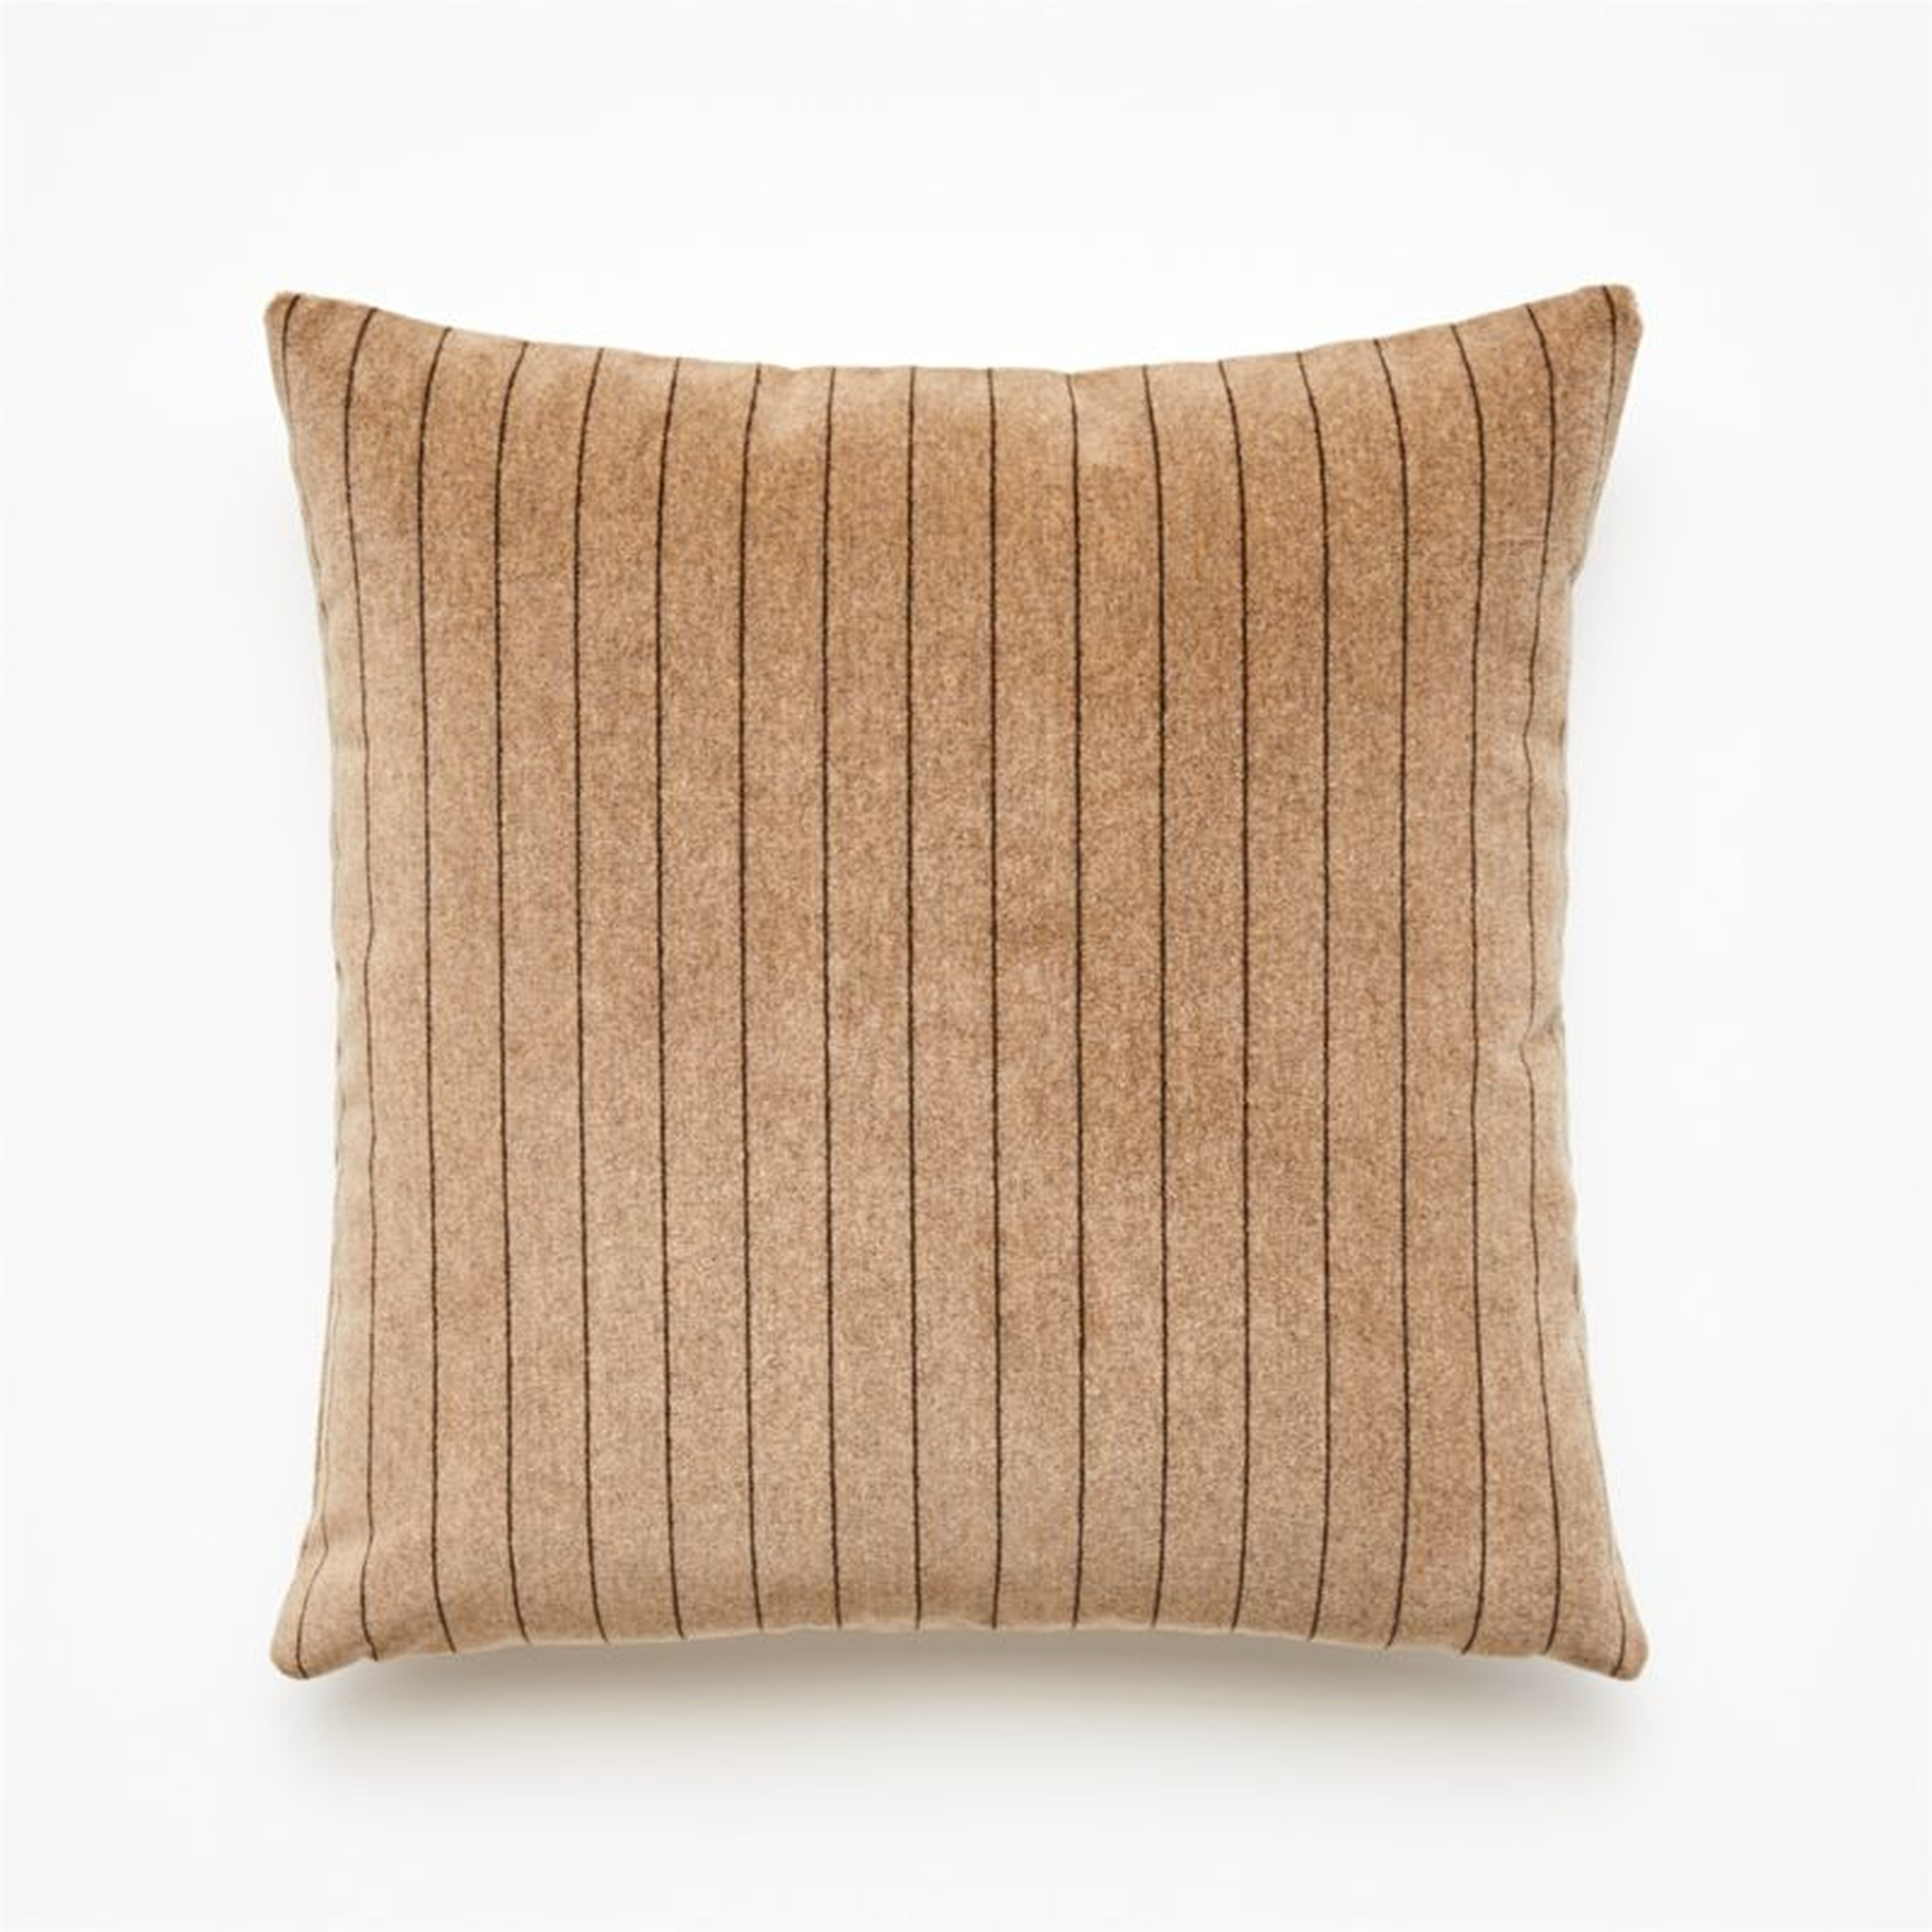 Boundary Pillow, Down-Alternative, Light Brown, 18" x 18" - CB2